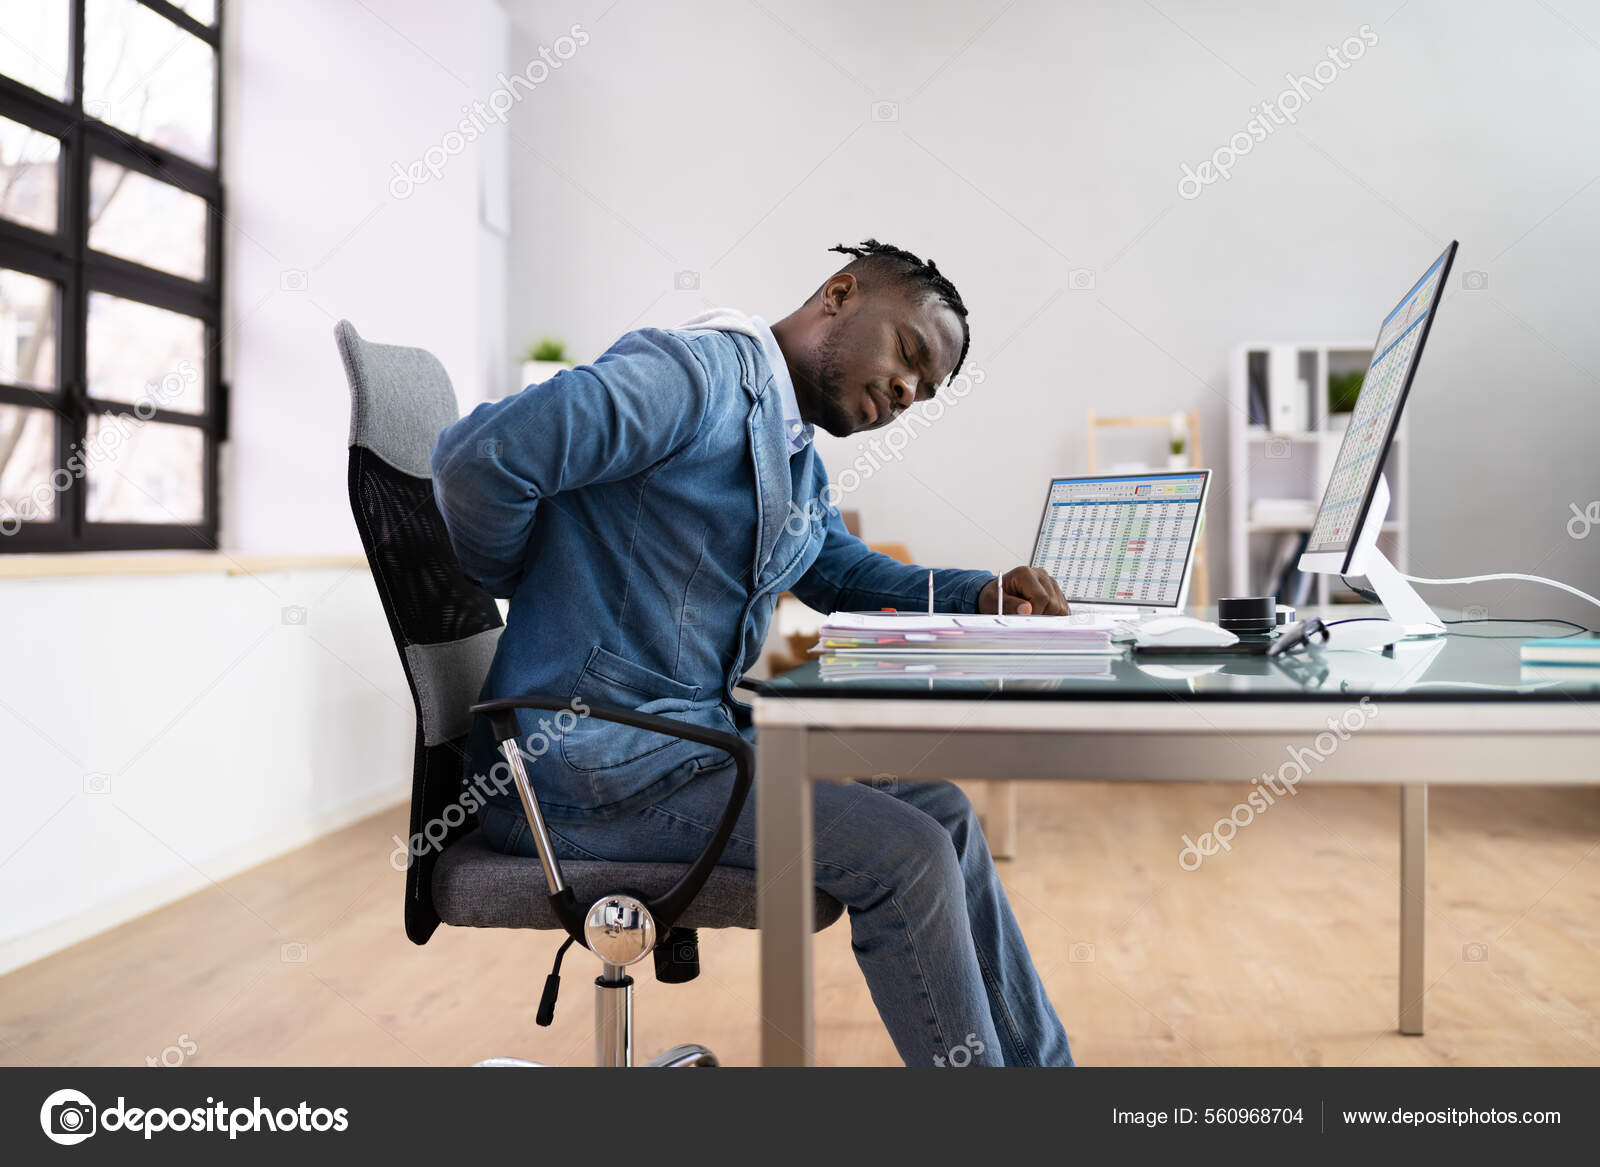 bad desk posture